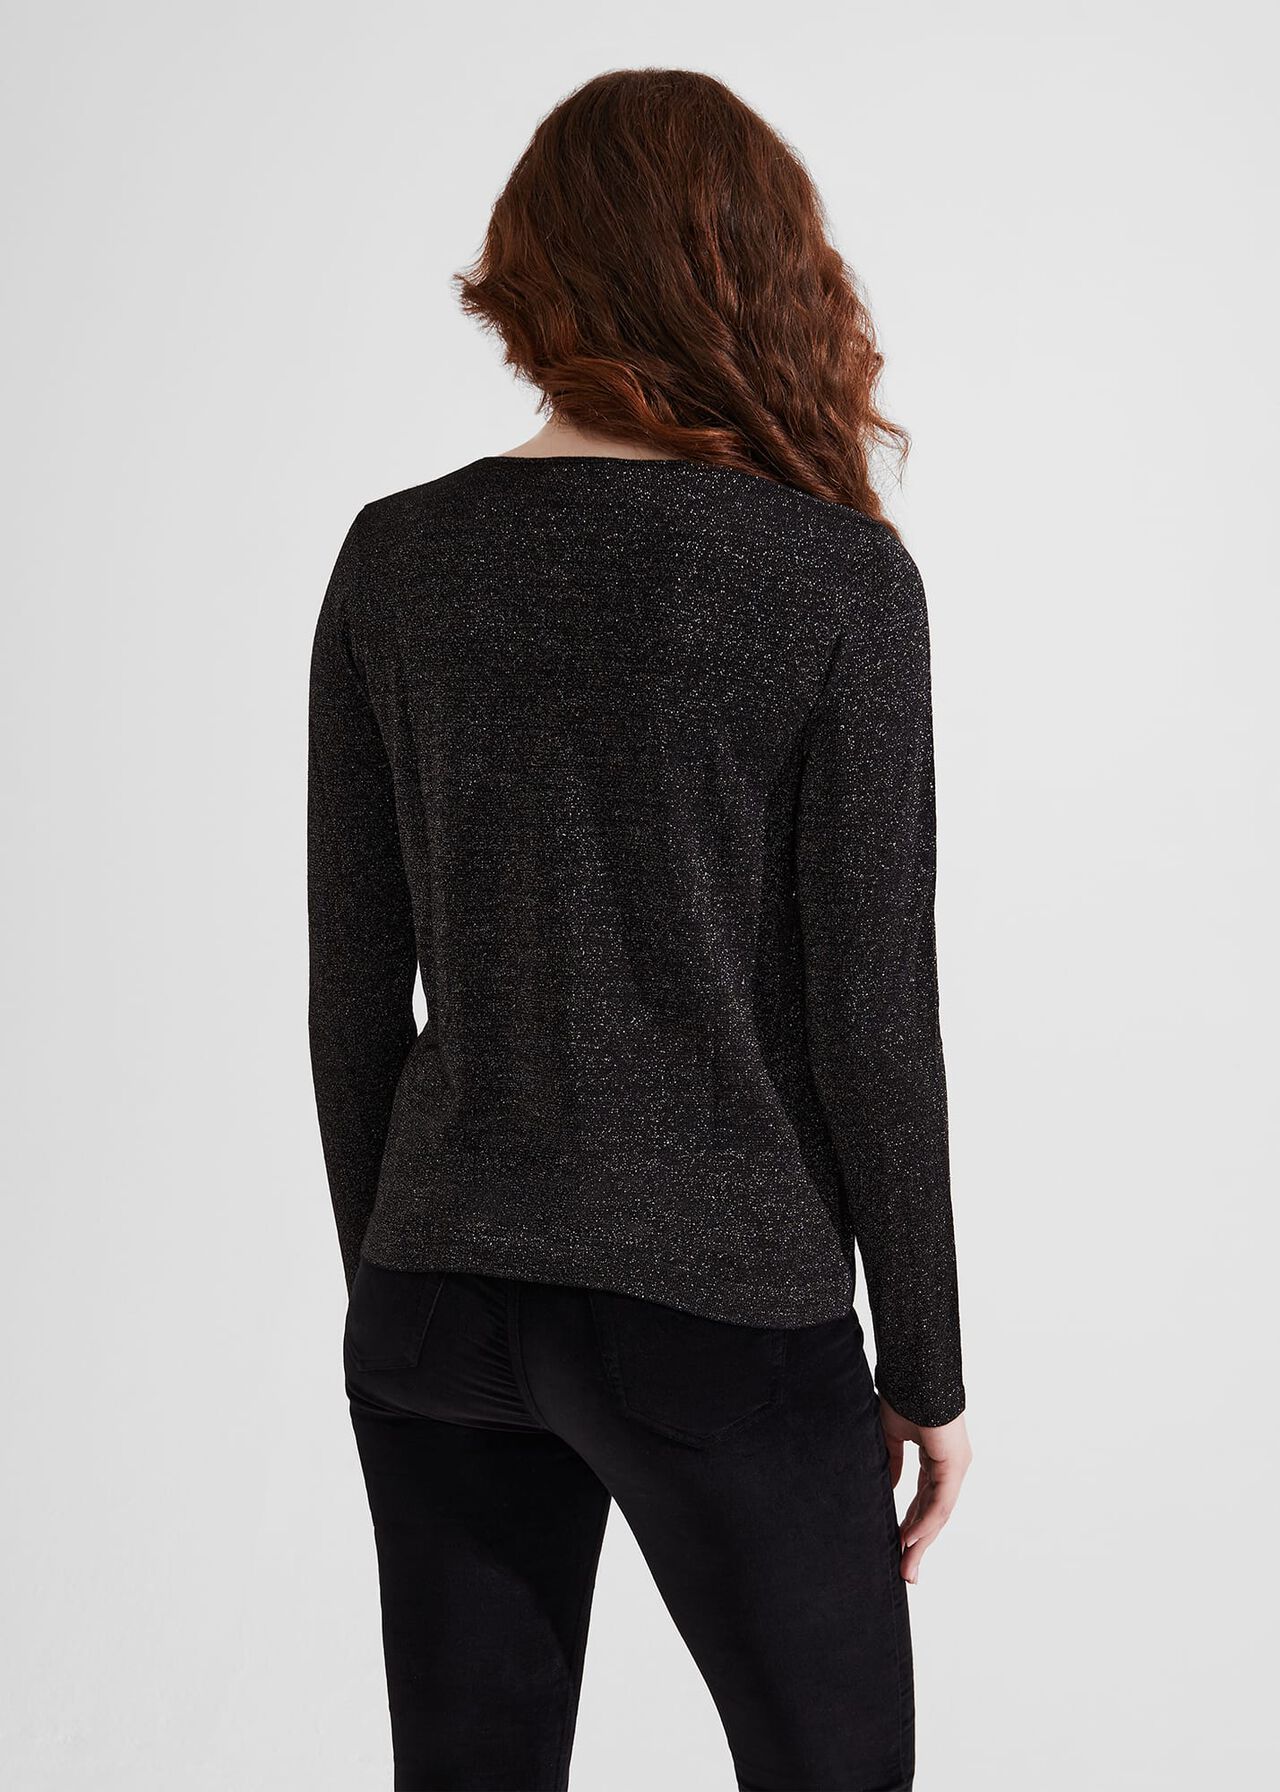 Myla Sparkle Sweater, Black Silver, hi-res